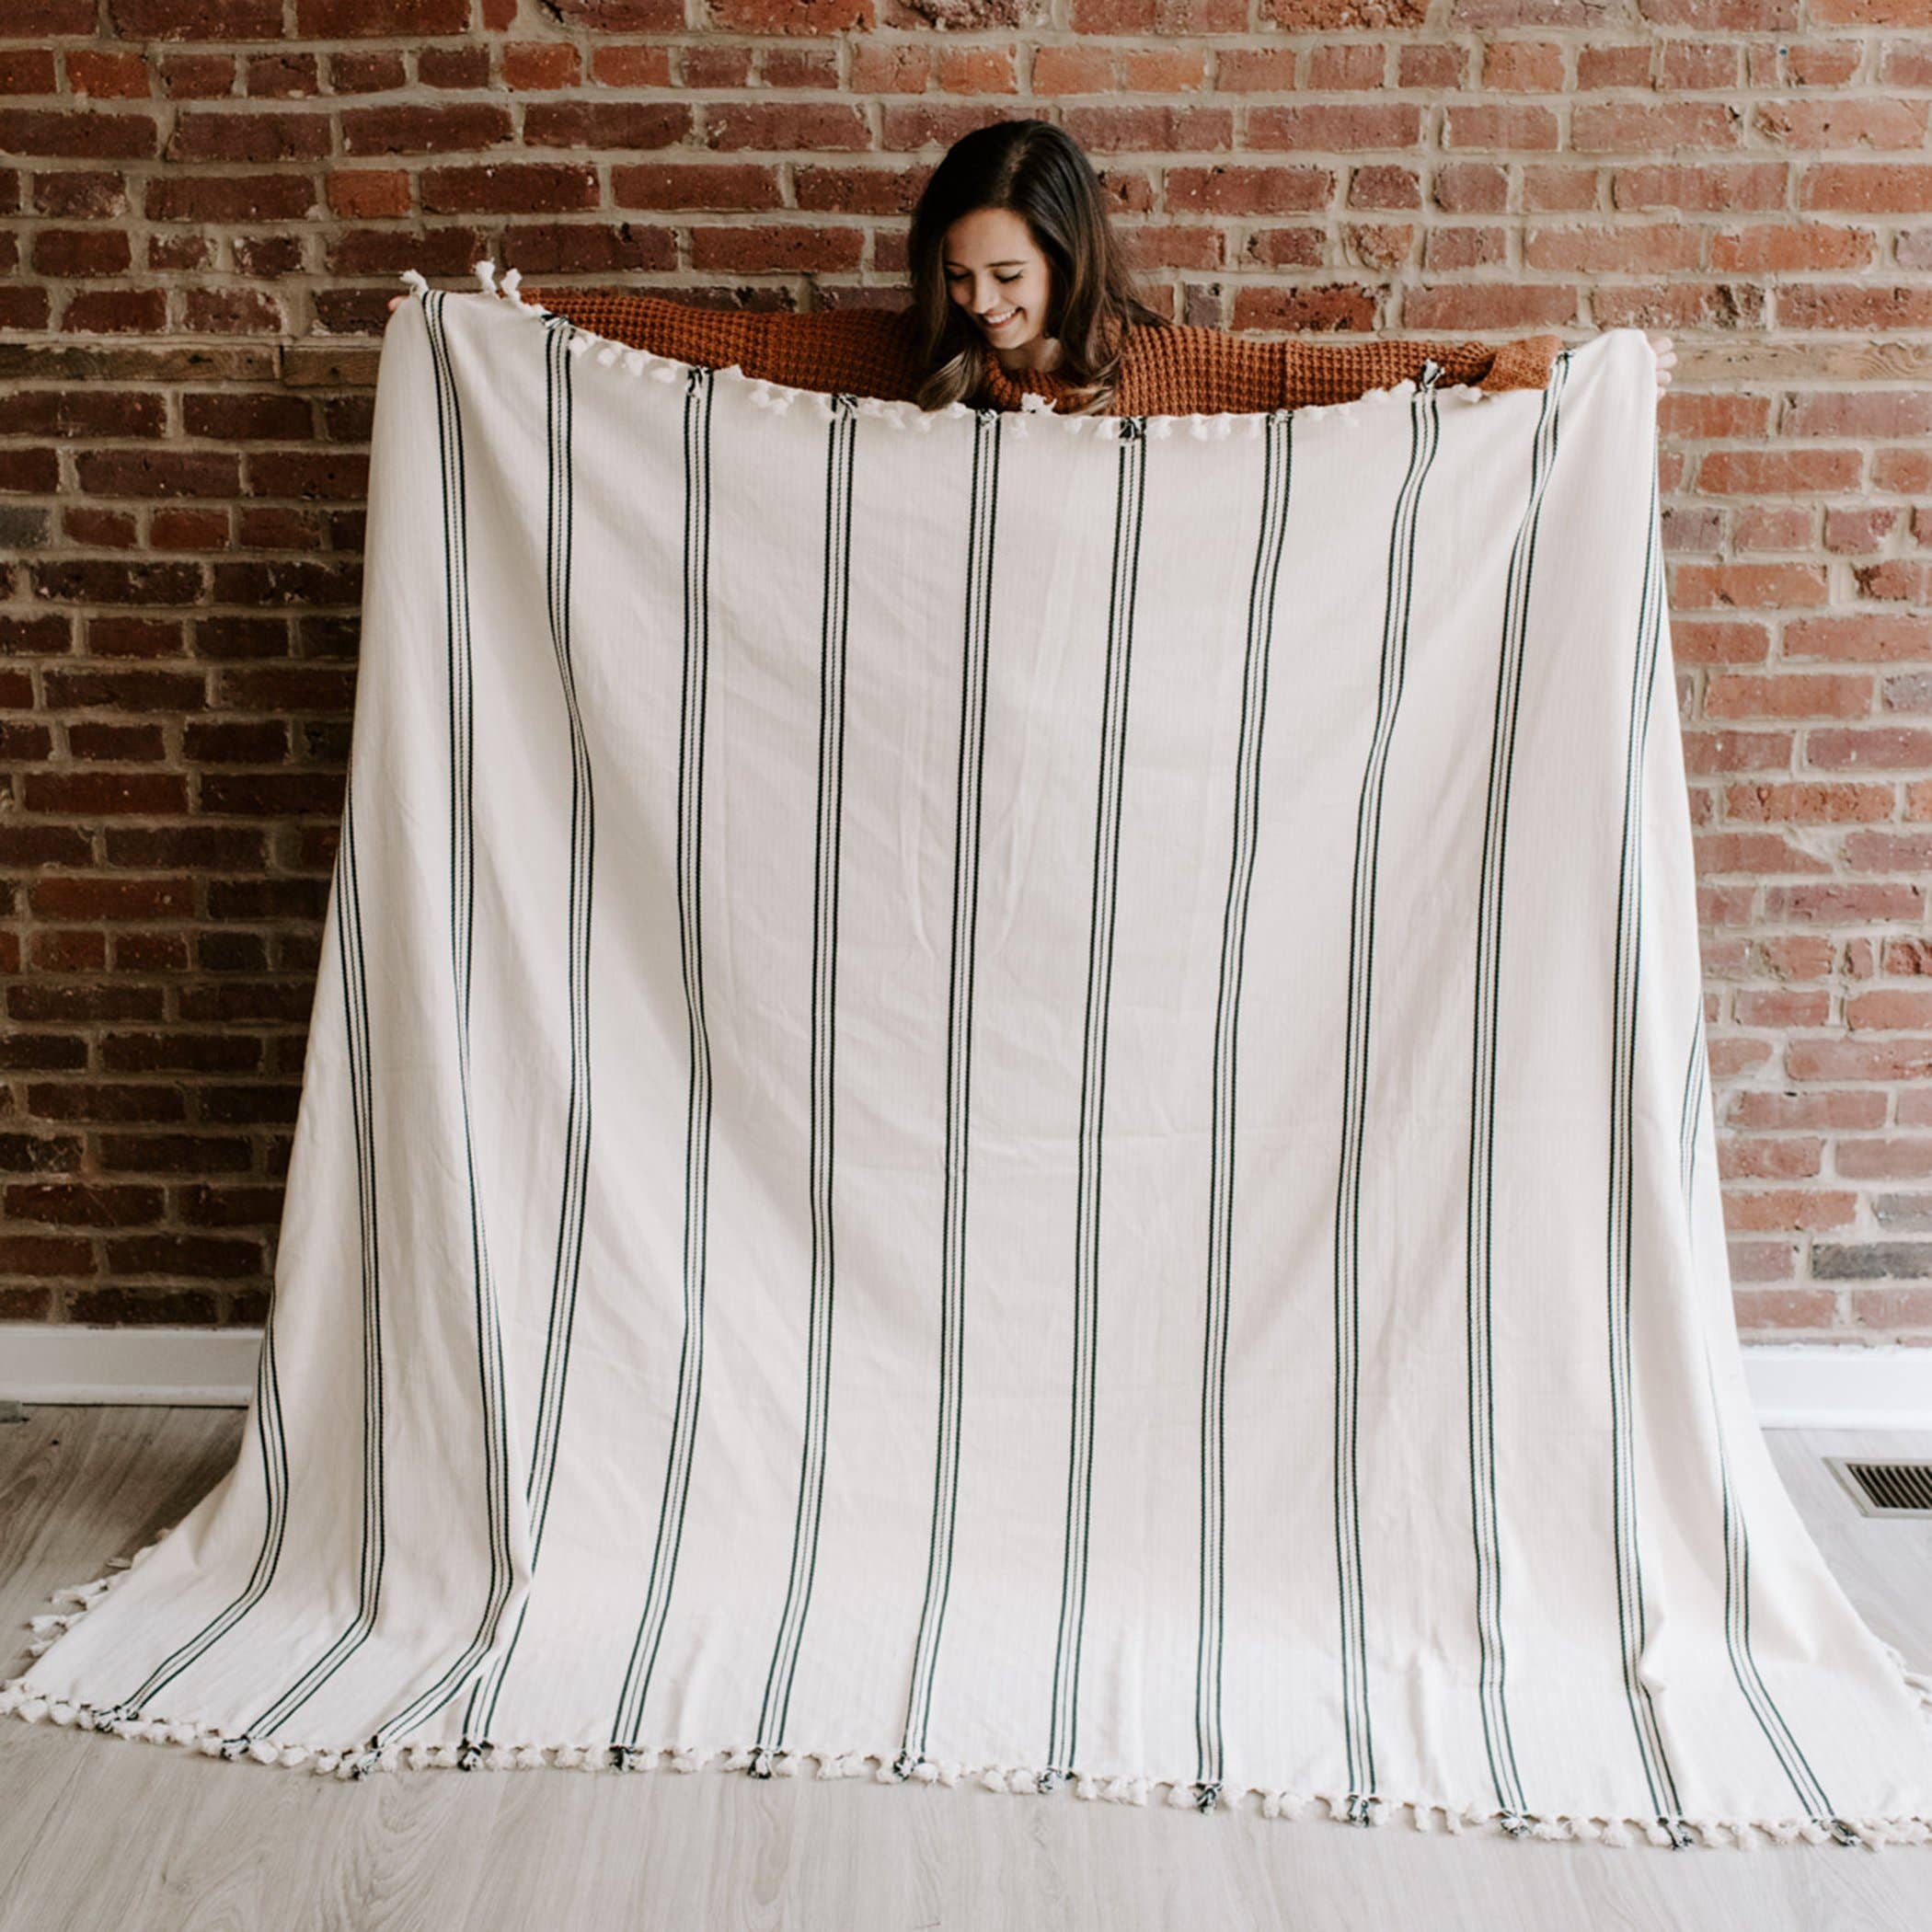 oversized striped throw blanket, 100% turkish cotton